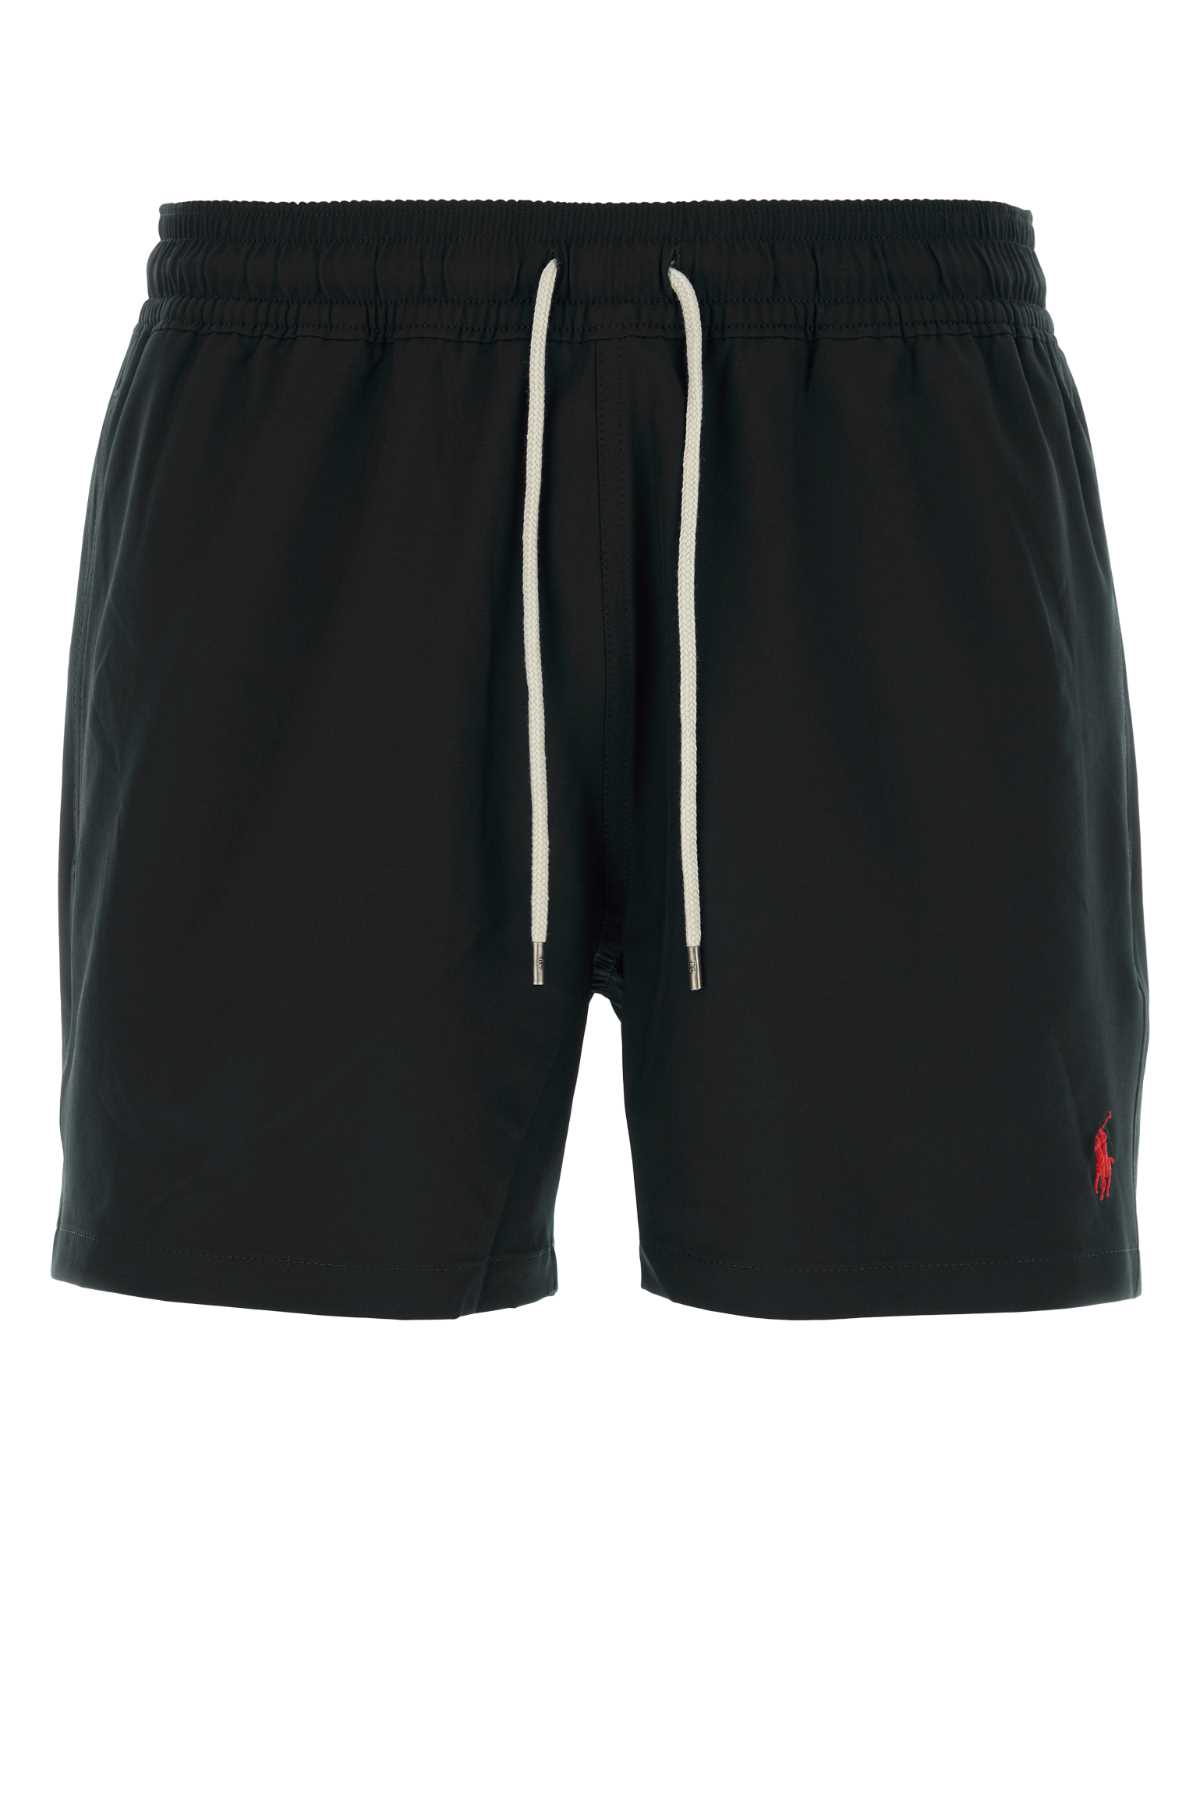 Black Stretch Polyester Swimming Shorts